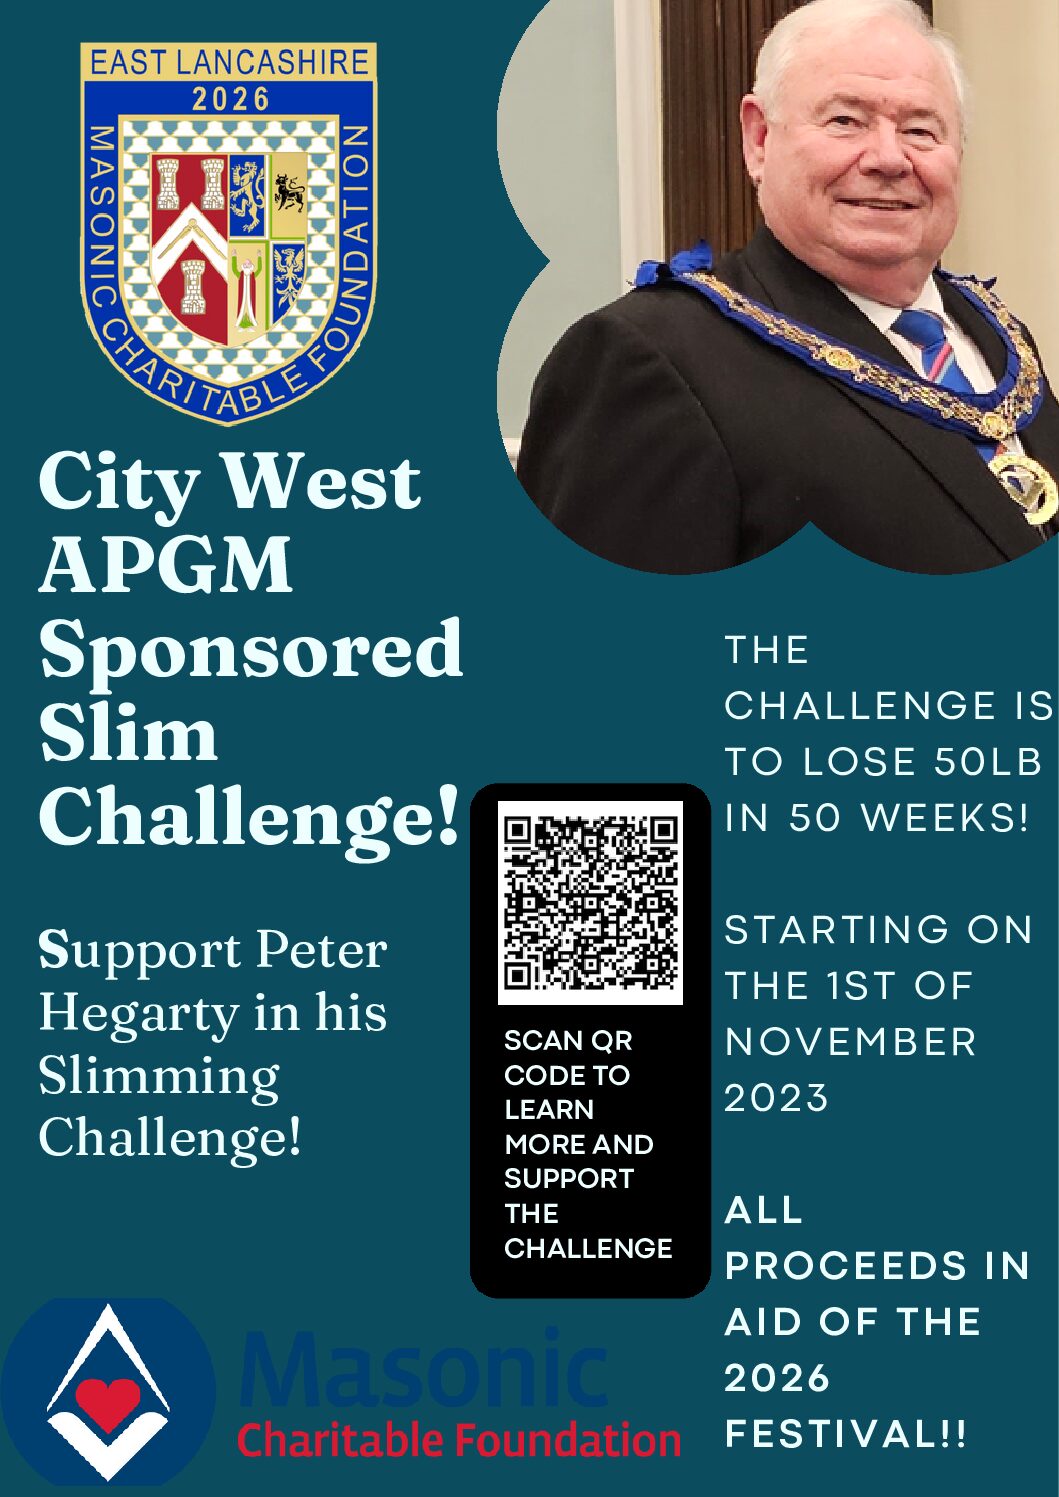 City West APGM Peter Hegarty’s Slim Challenge